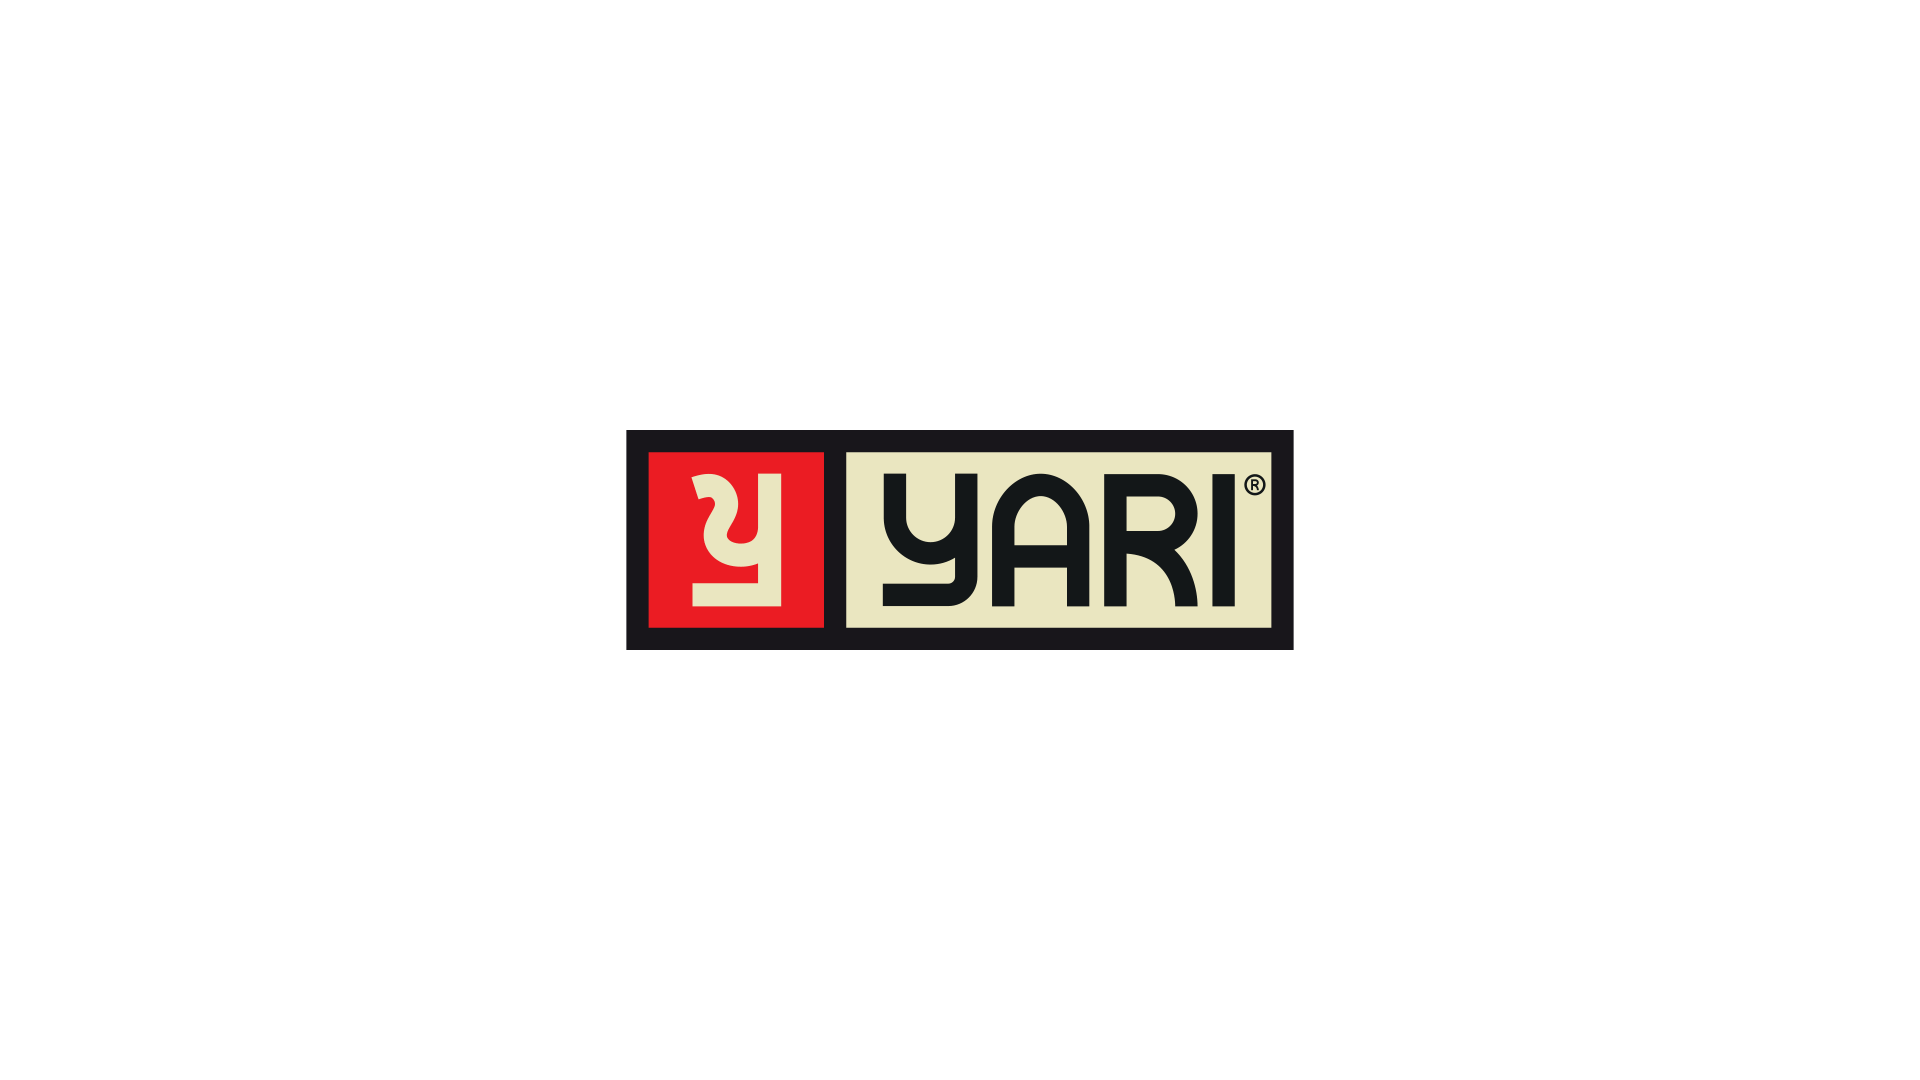 Yari – Packaging Of The World